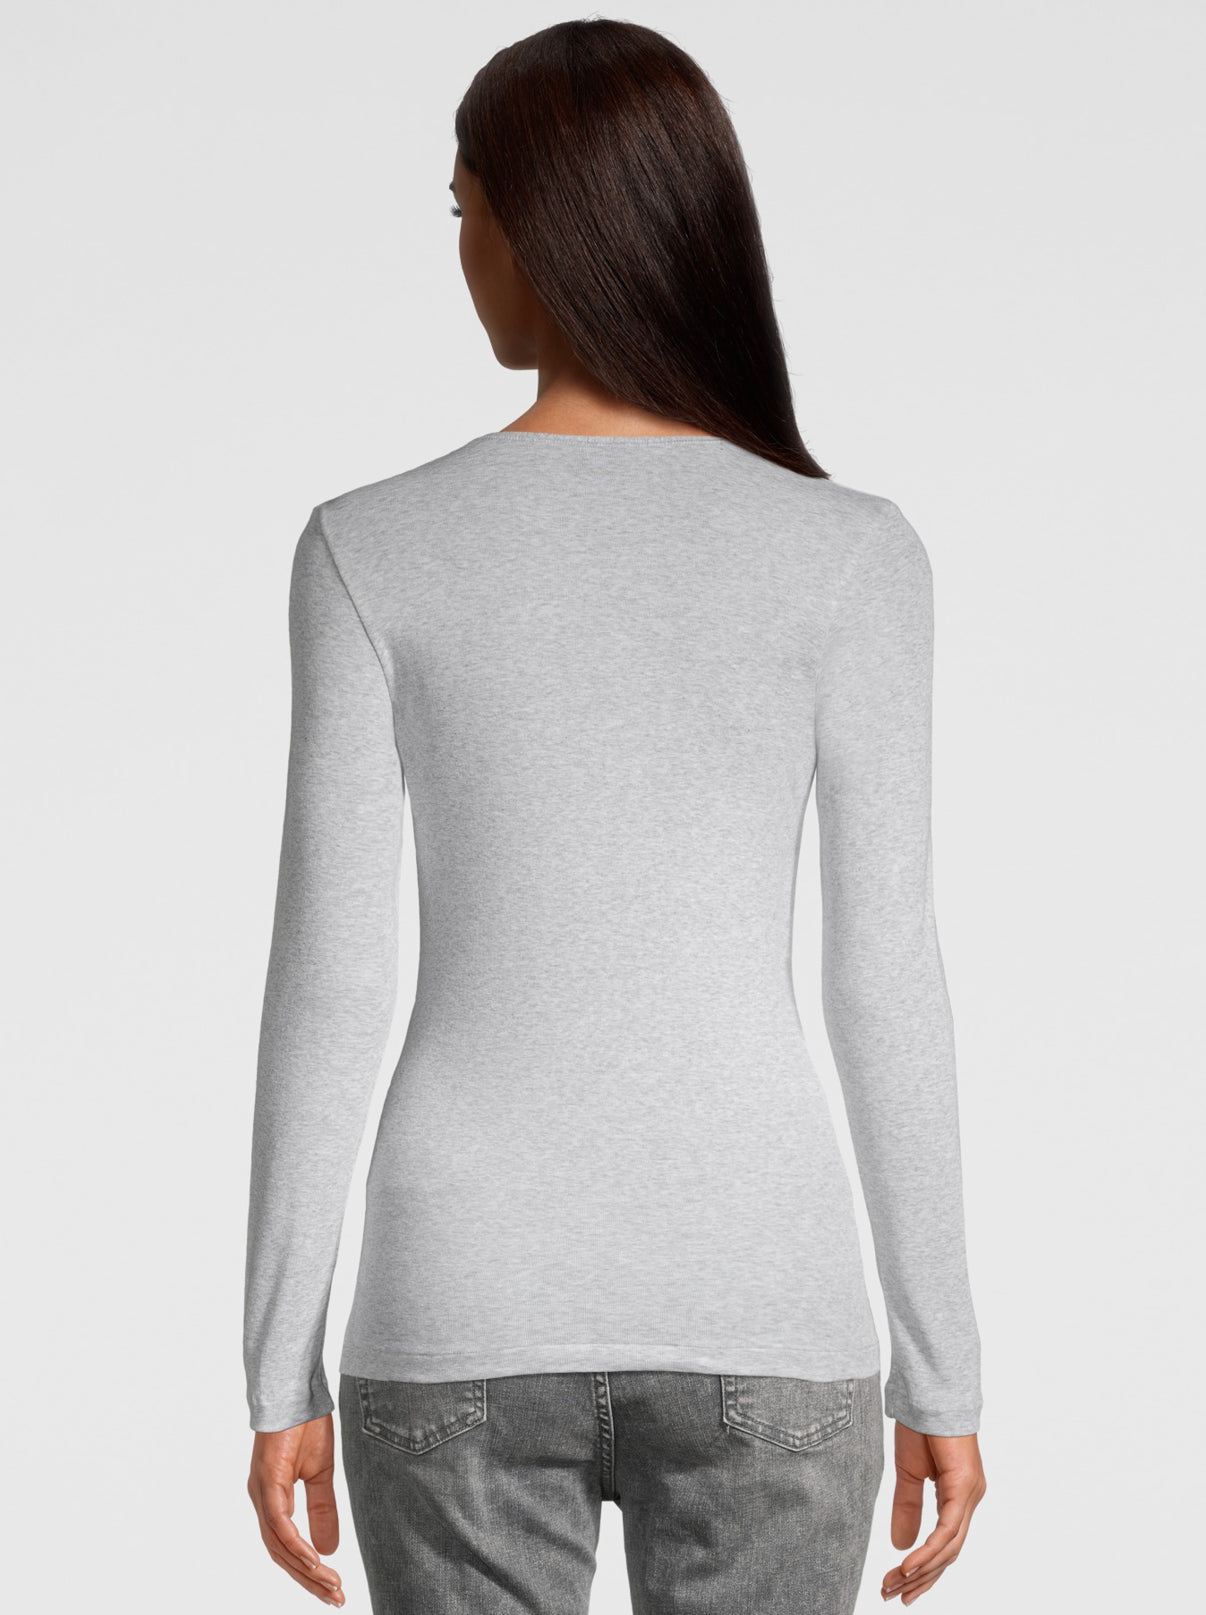 Back Woman Grey Cotton Shirt